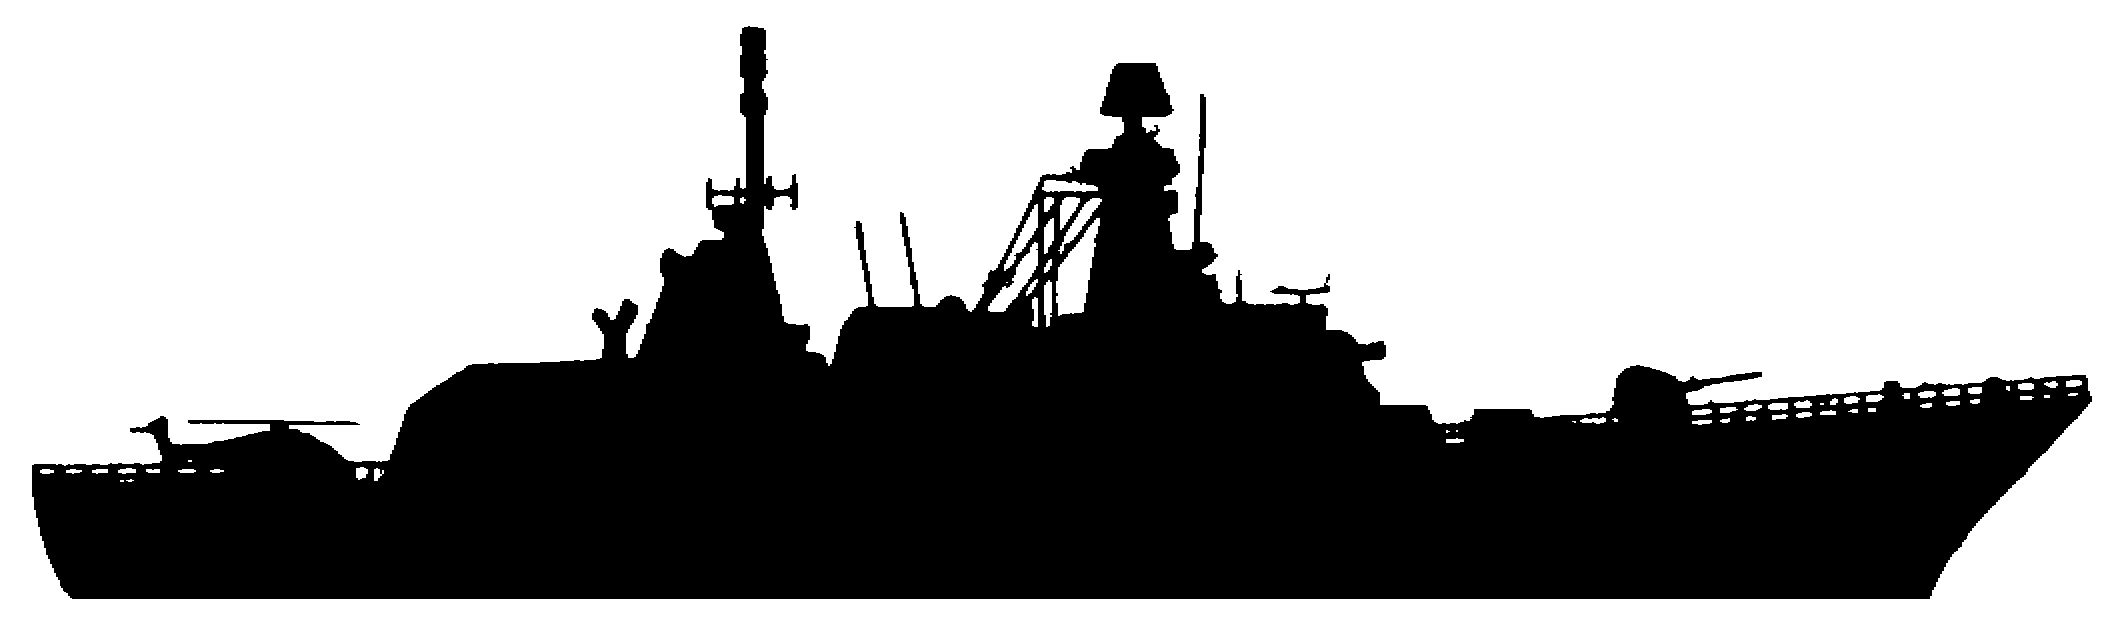 Battleship cliparts 